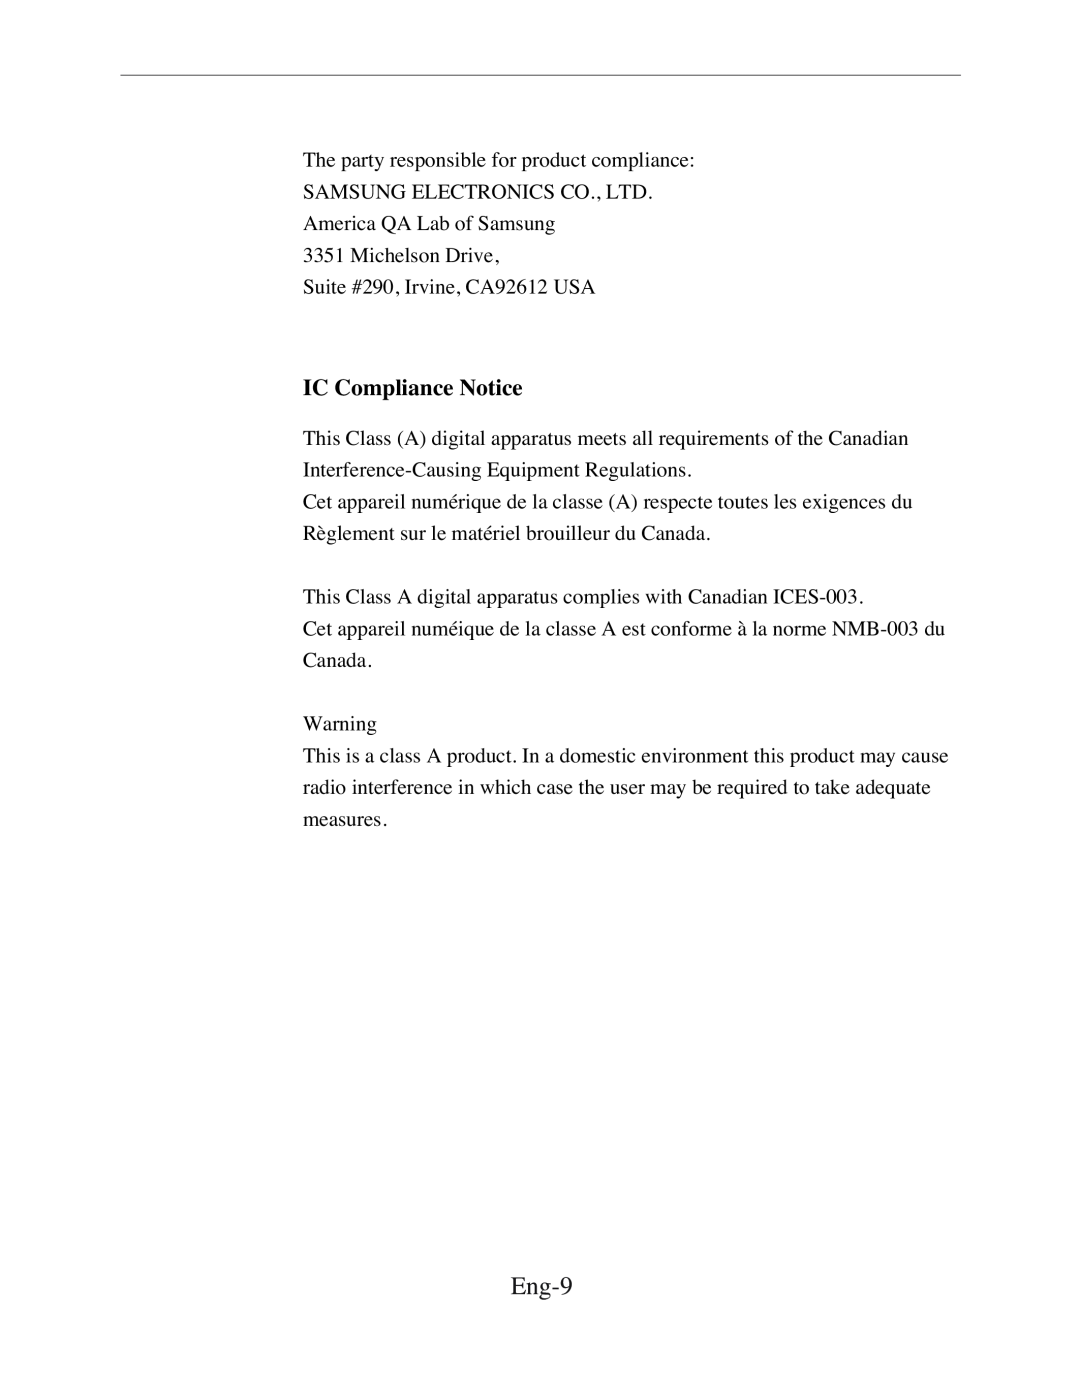 Samsung SMC-150FP, SMC-212FP, SMC-152FPV, SMC-210FPV manual Eng-9, IC Compliance Notice 